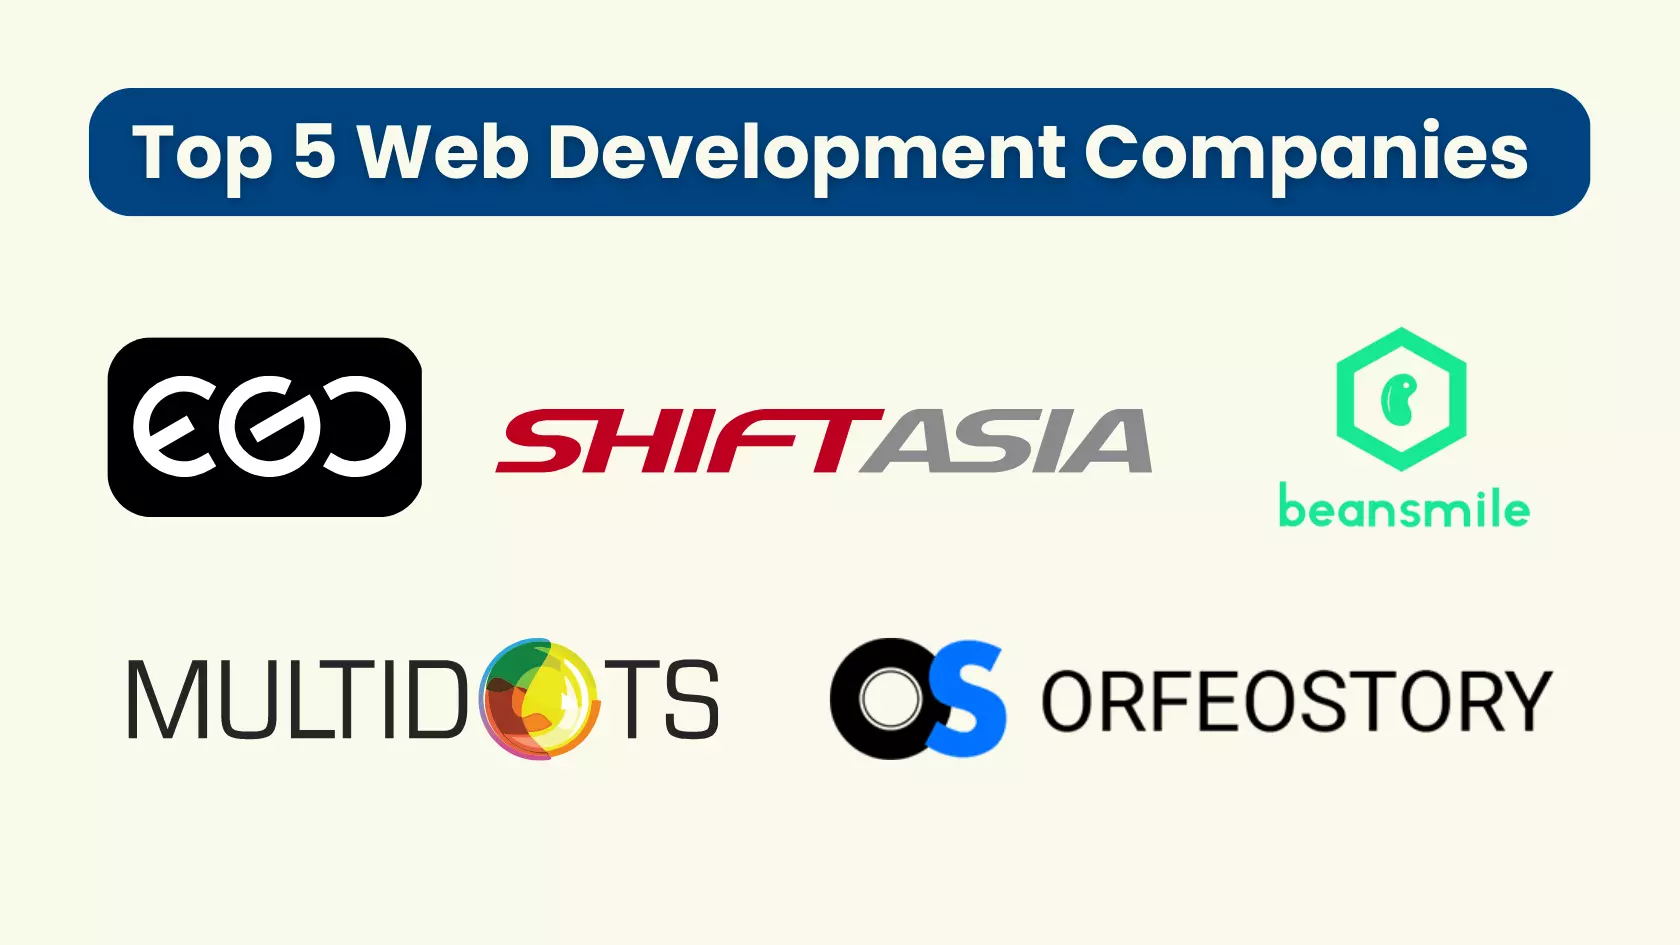 Top Web Development Companies